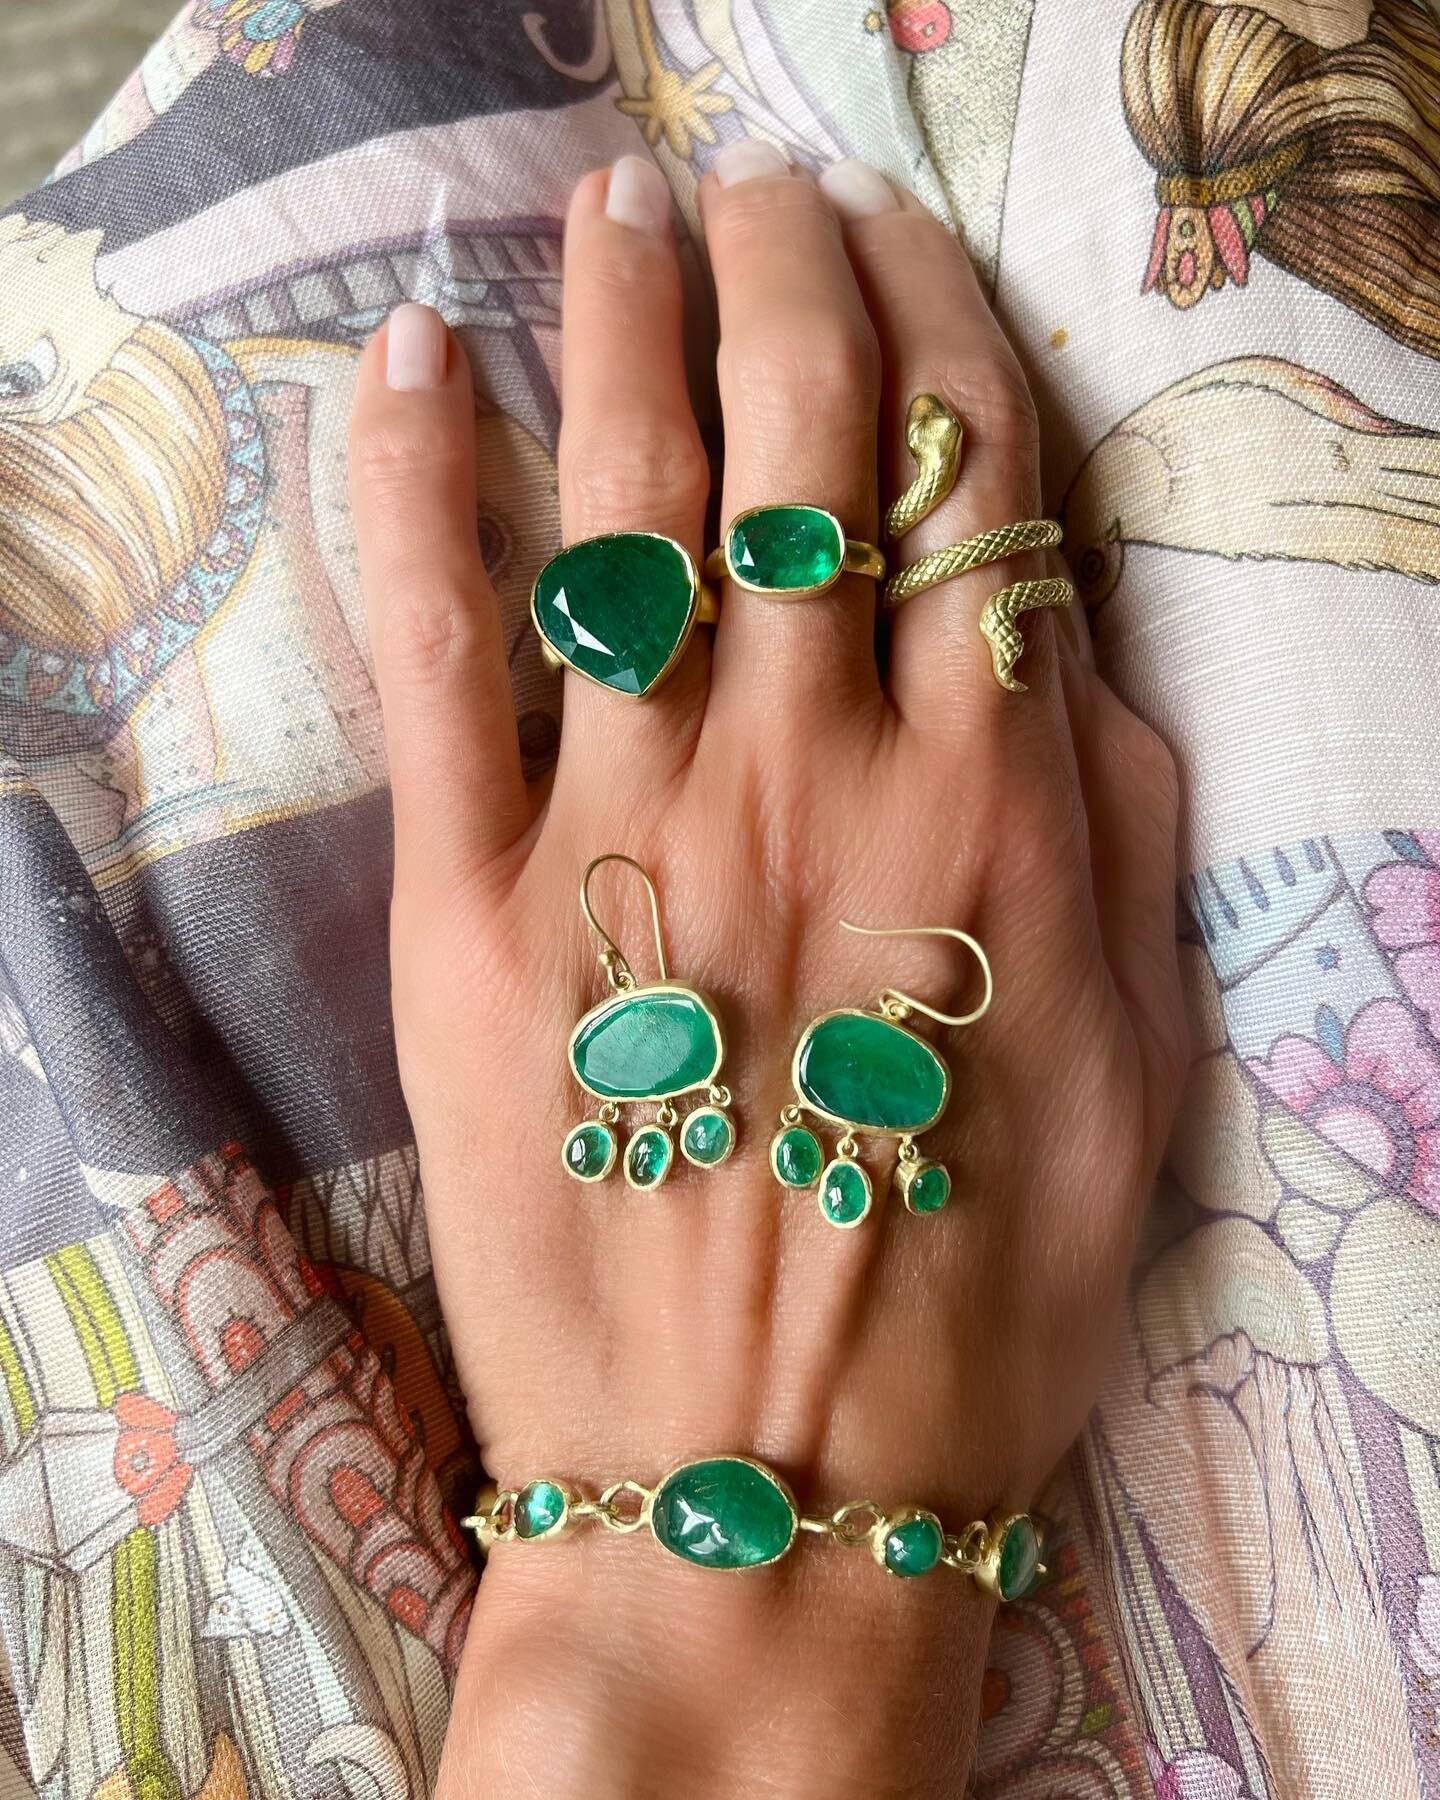 Emerald 💚⁣
⁣
#emerald #layeringjewelry #jotd #foreverpieces #modernheritage #futureheirlooms #instajewelry #jewelleryaddict #jewellerylover #sophietheakston #sophietheakstonjewellery